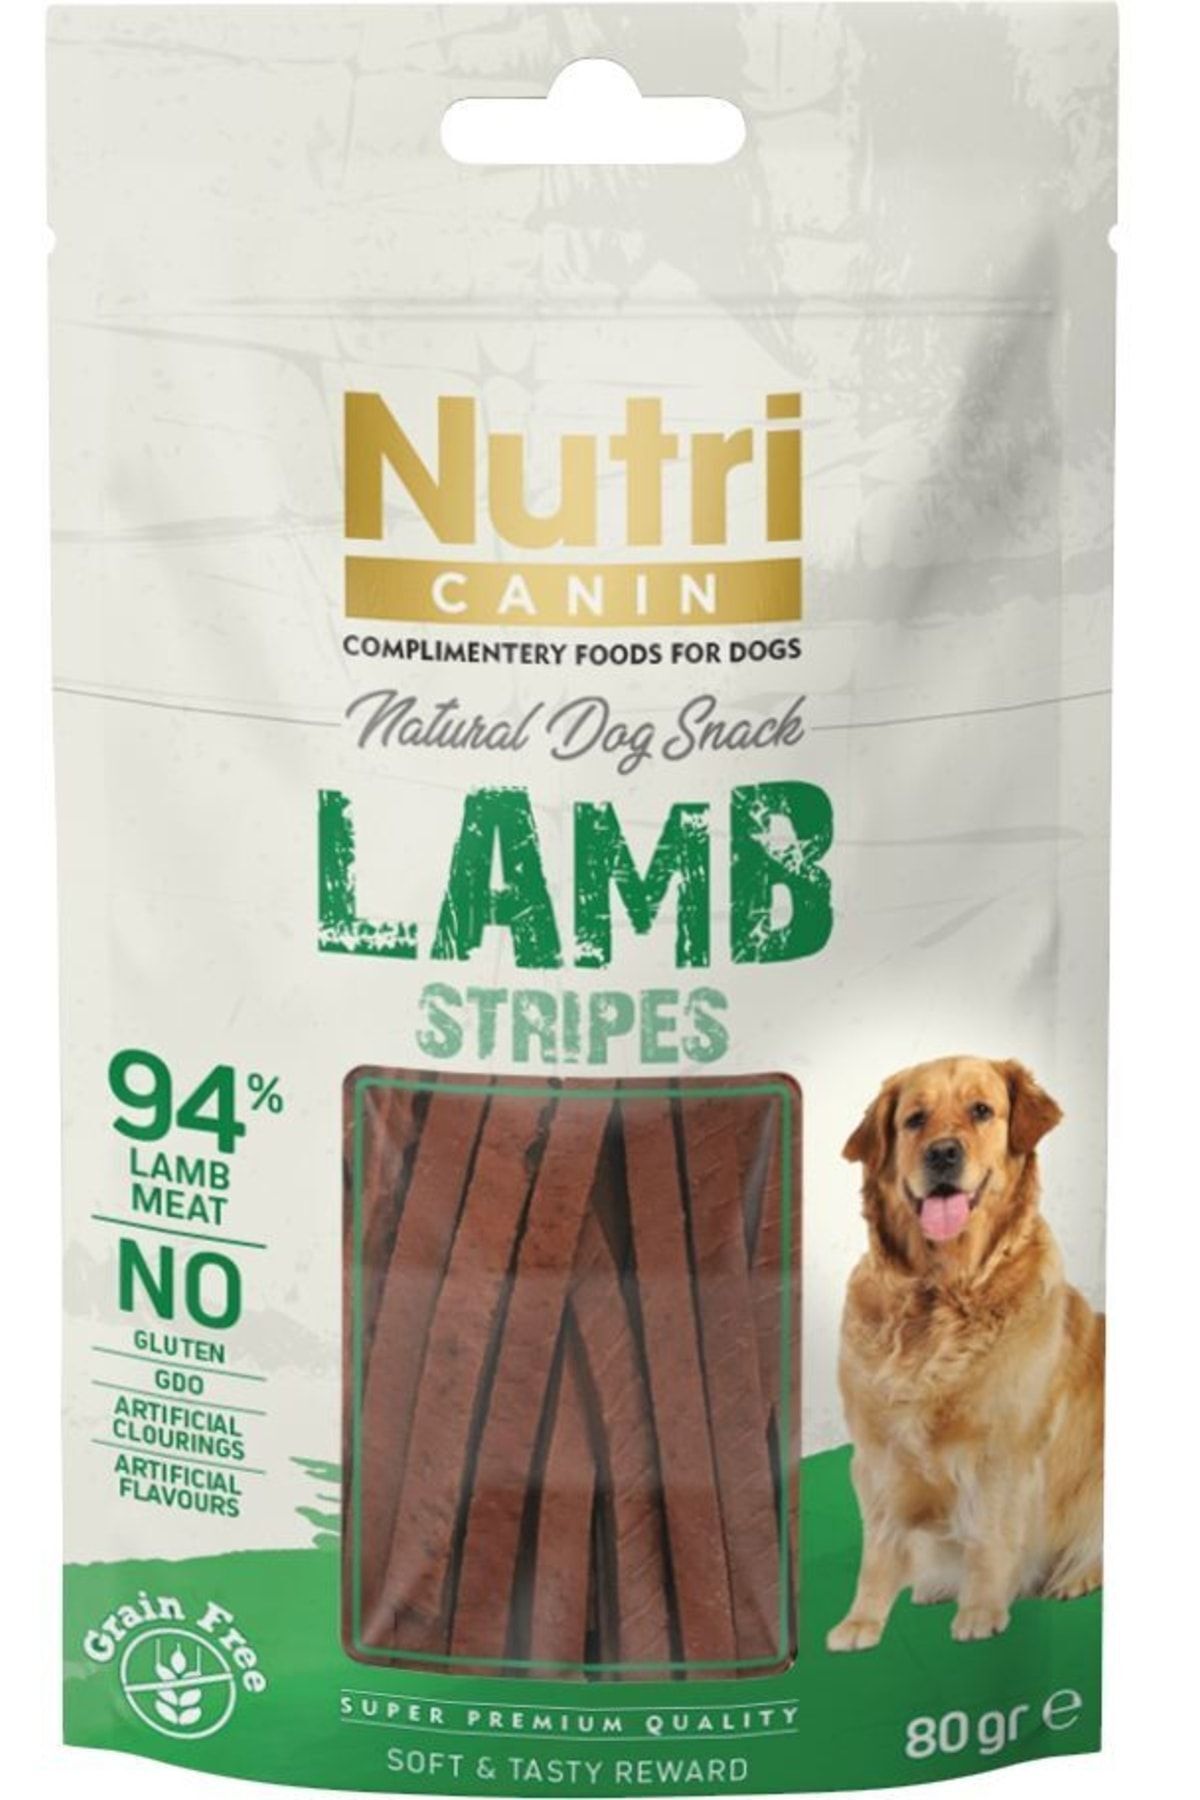 Nutri Canin Lamb(kuzu Etli) Stripes Snack 80gr.